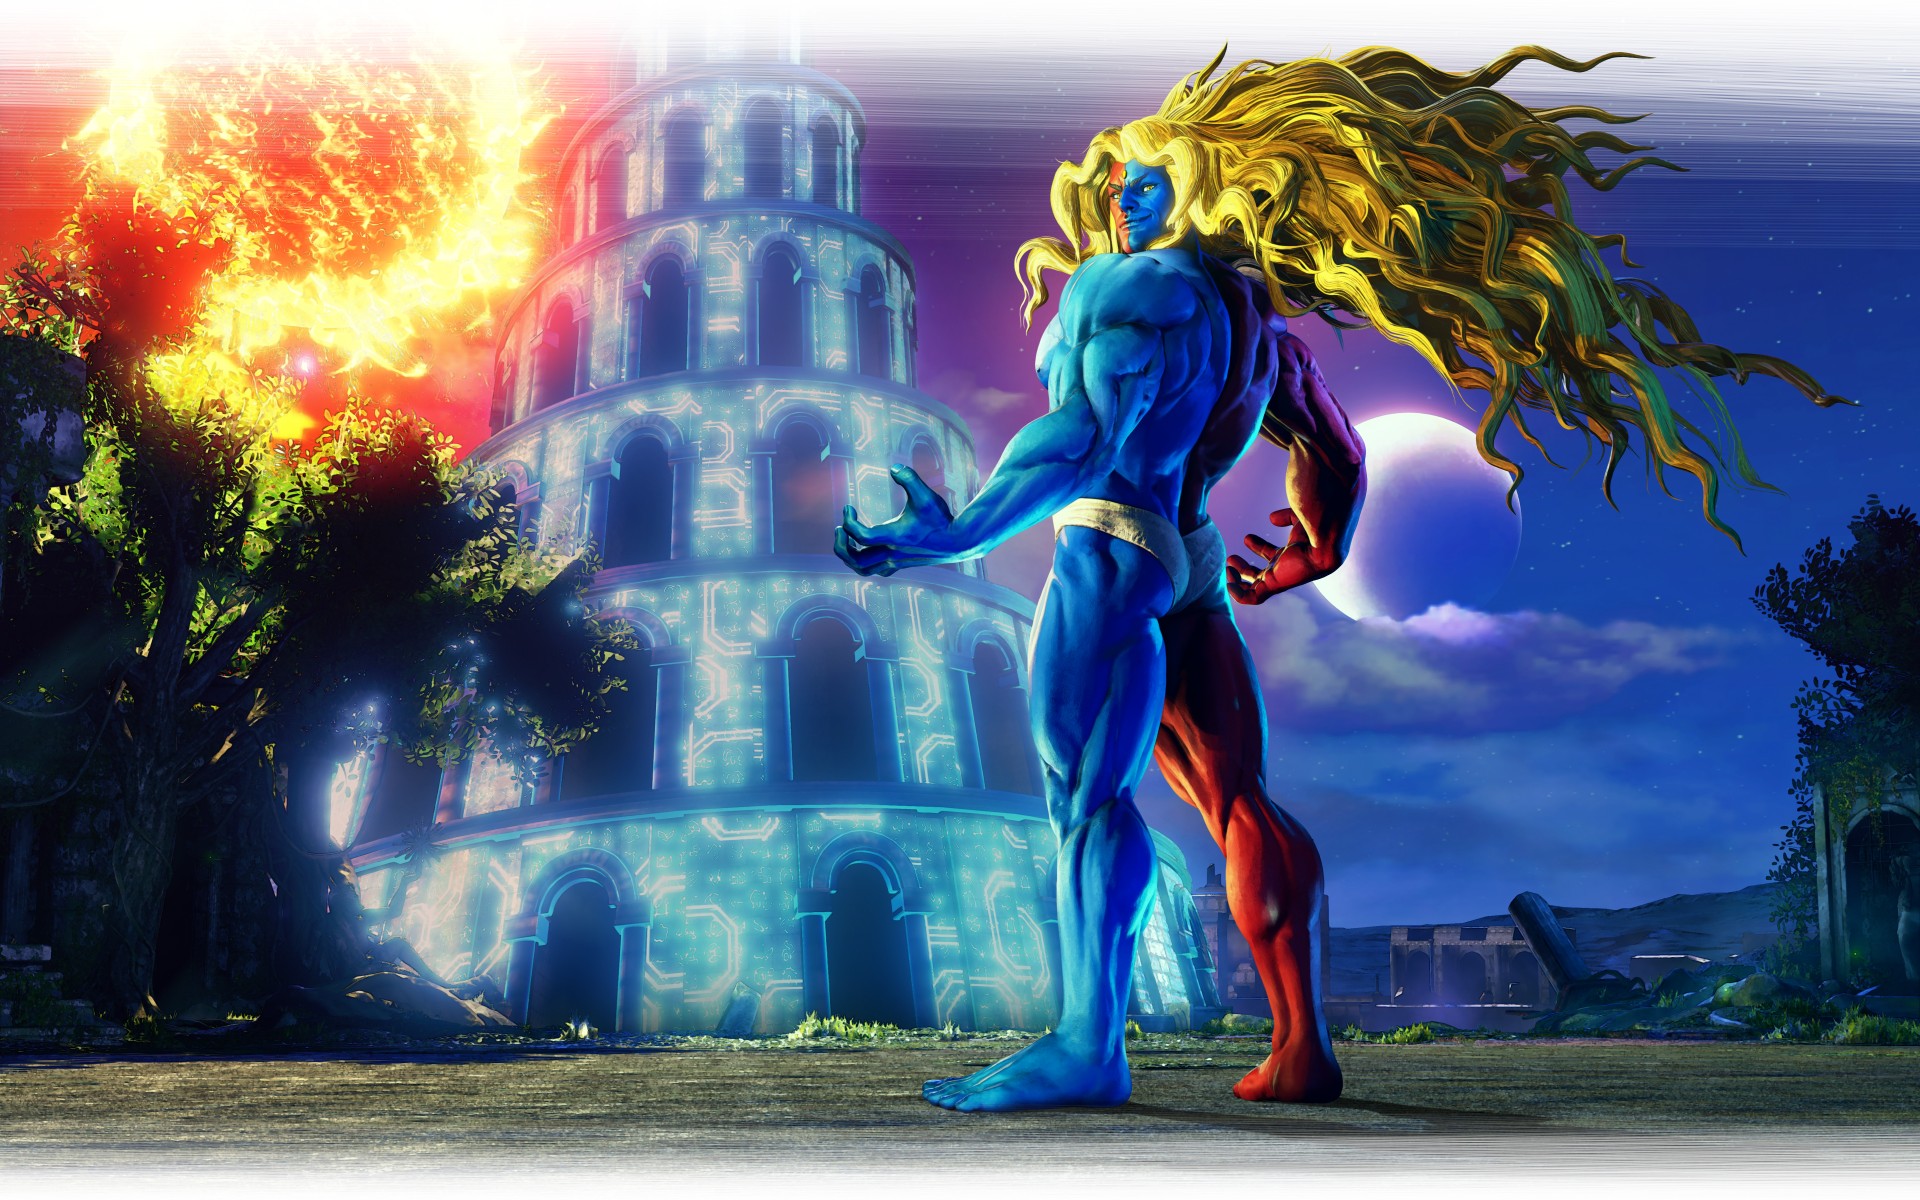 Capcom Breaks Down Street Fighter 5 Champion Edition Content